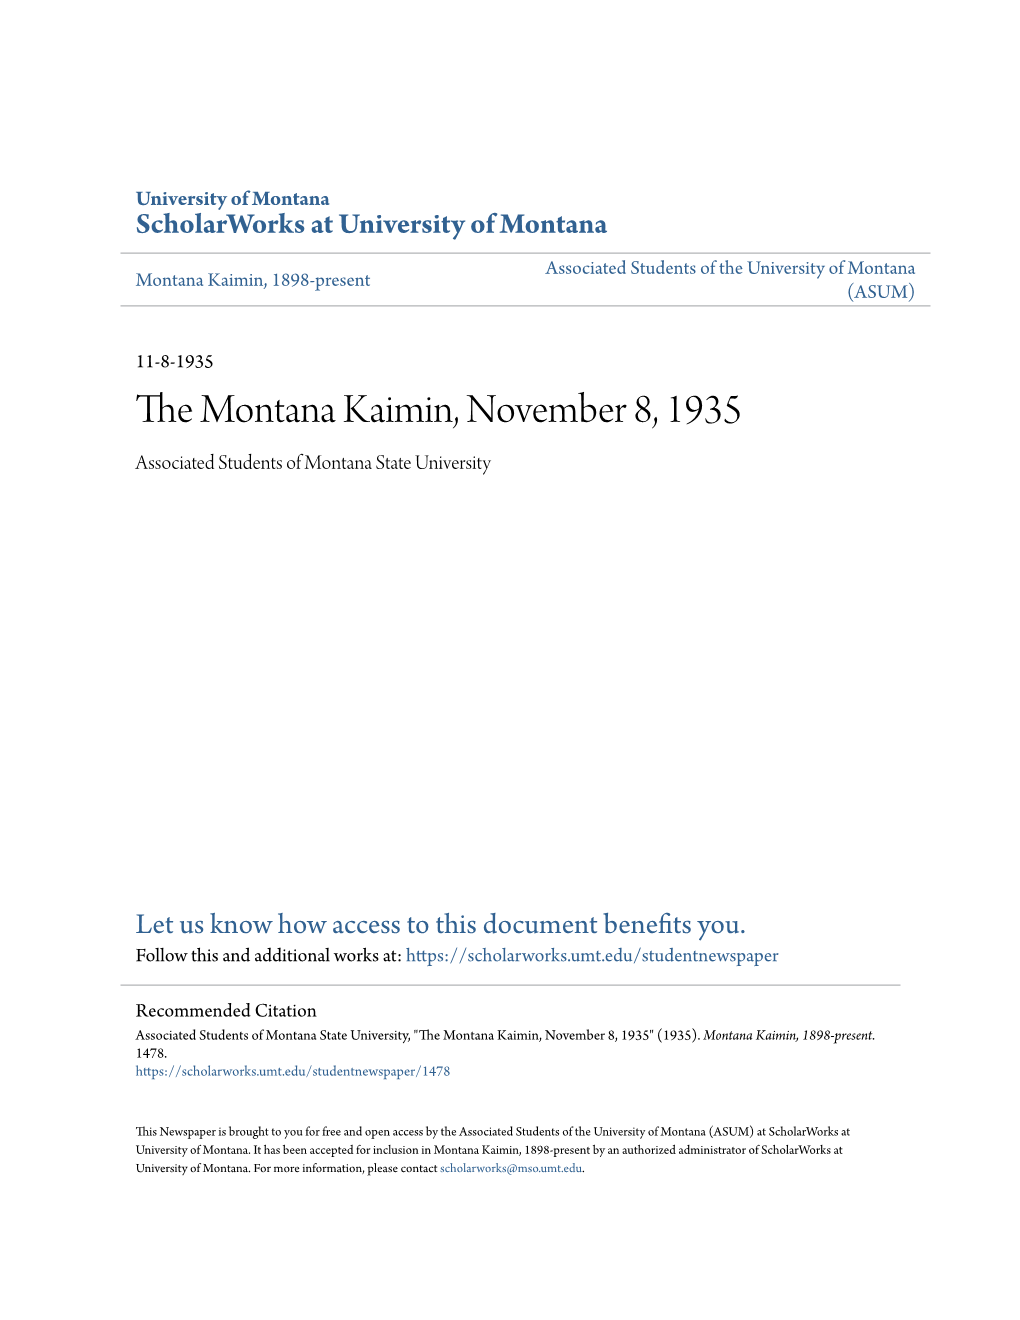 The Montana Kaimin, November 8, 1935